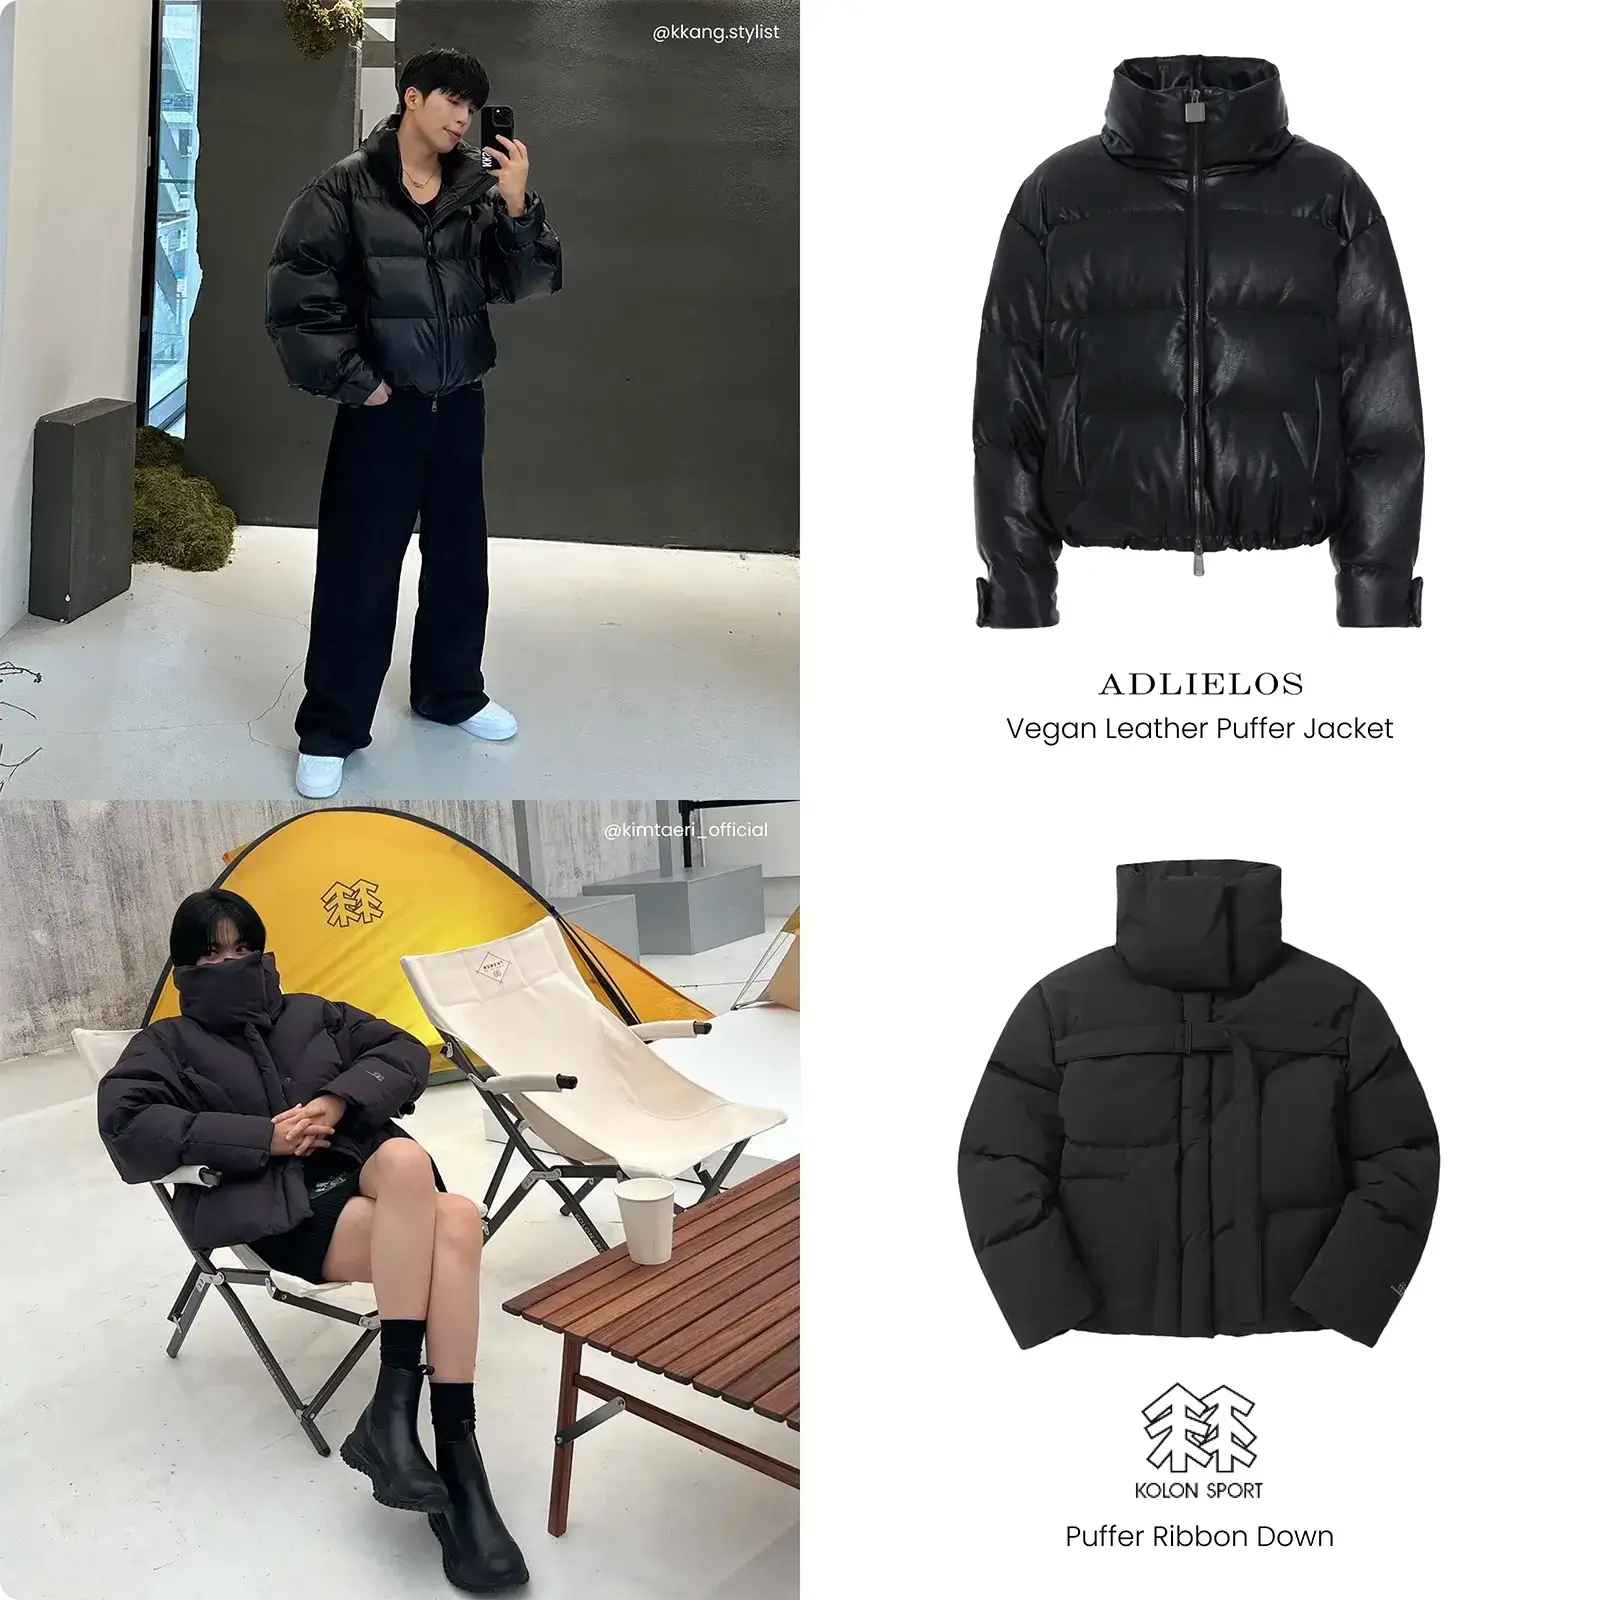 Korean puffer jackets from Adlielos and Kolon Sport